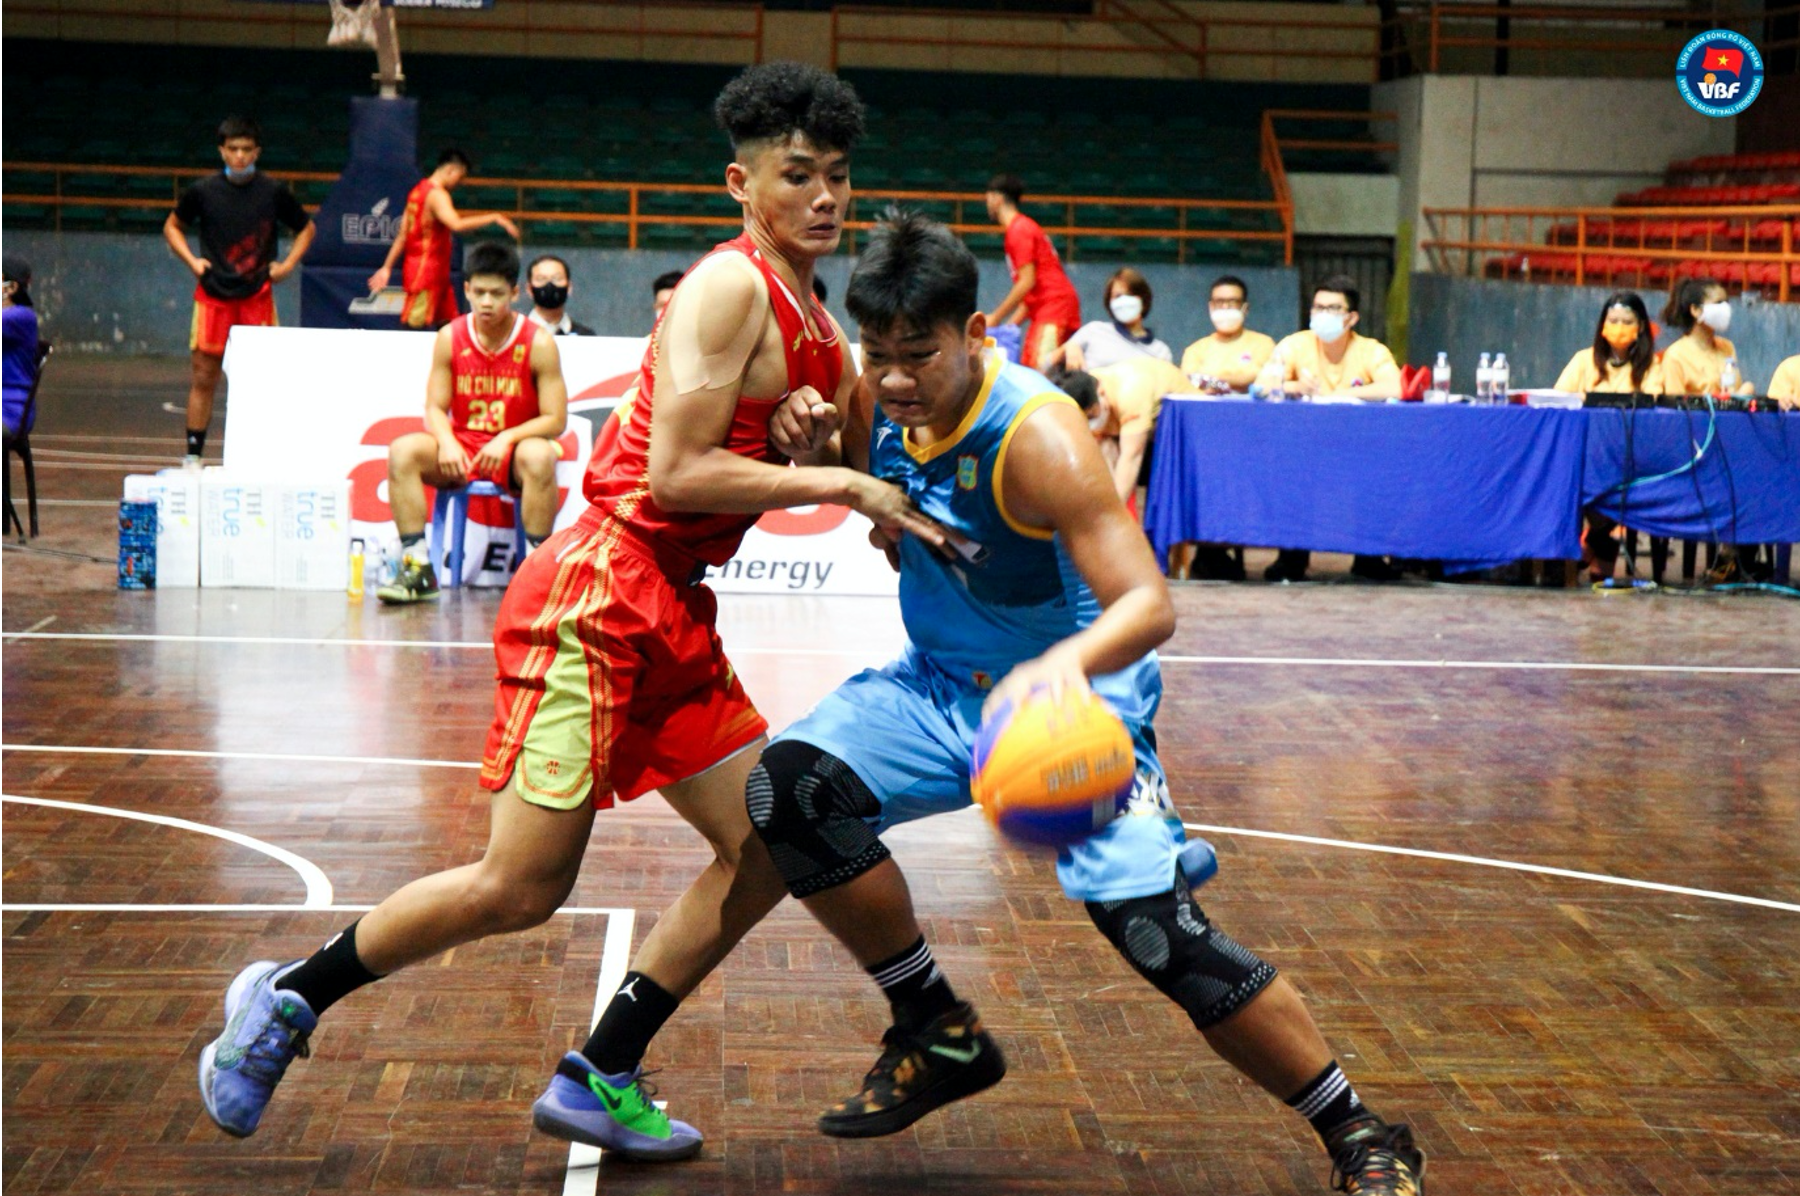 Group B teams' players compete at the 2021 National 3x3 U23 Basketball Championship. Photo: VBA